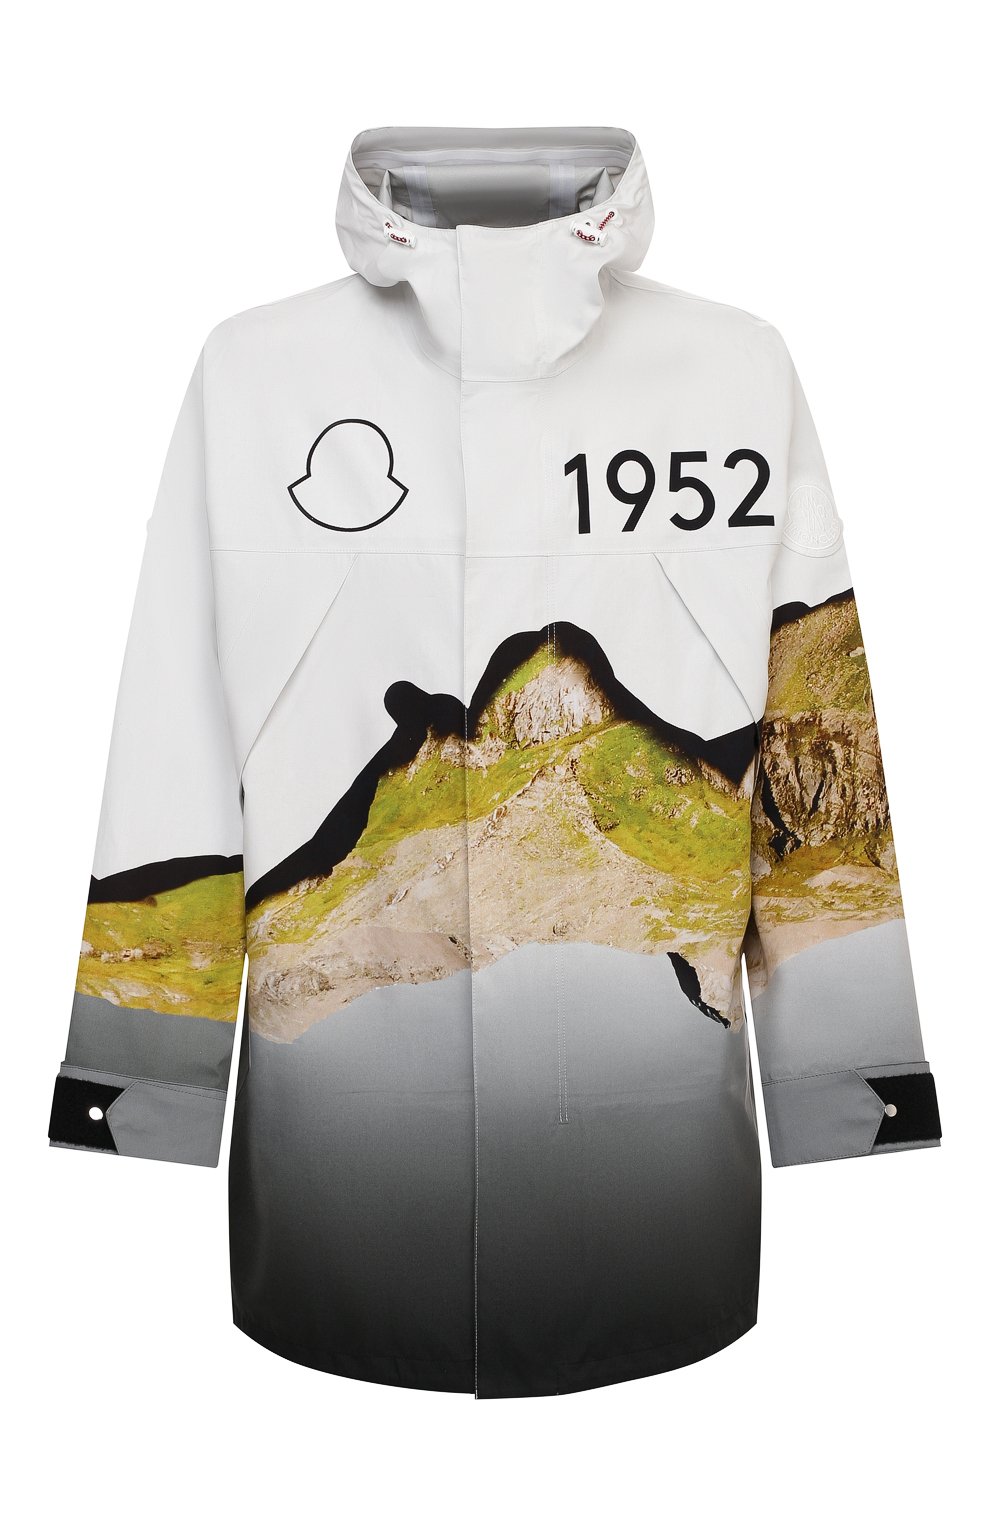 Хлопковая куртка Kalalau 2 Moncler 1952 Moncler Genius